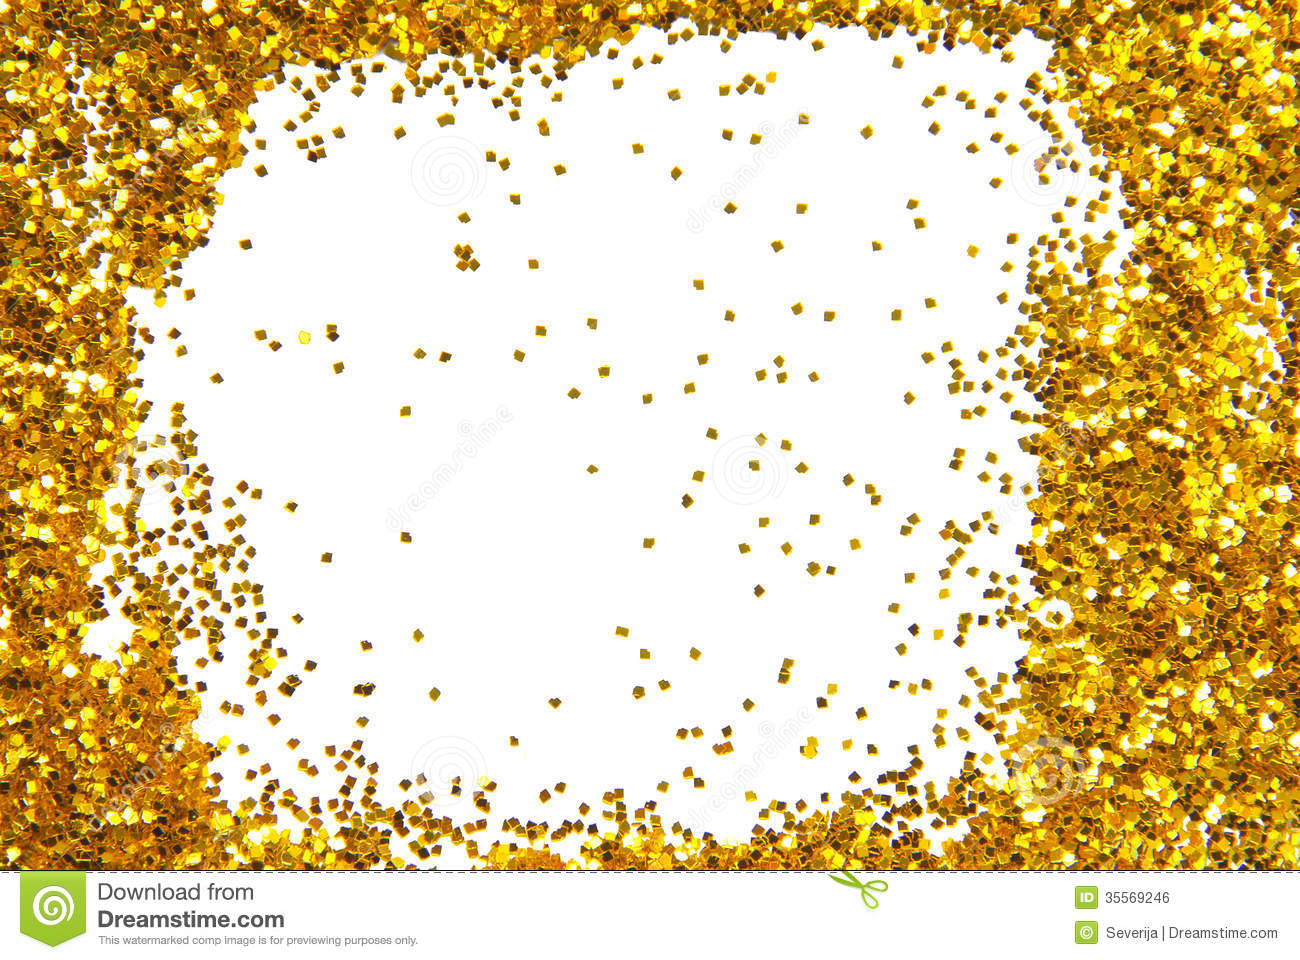 Golden Sparkle Glittering Frame Royalty Free Stock Image   Image